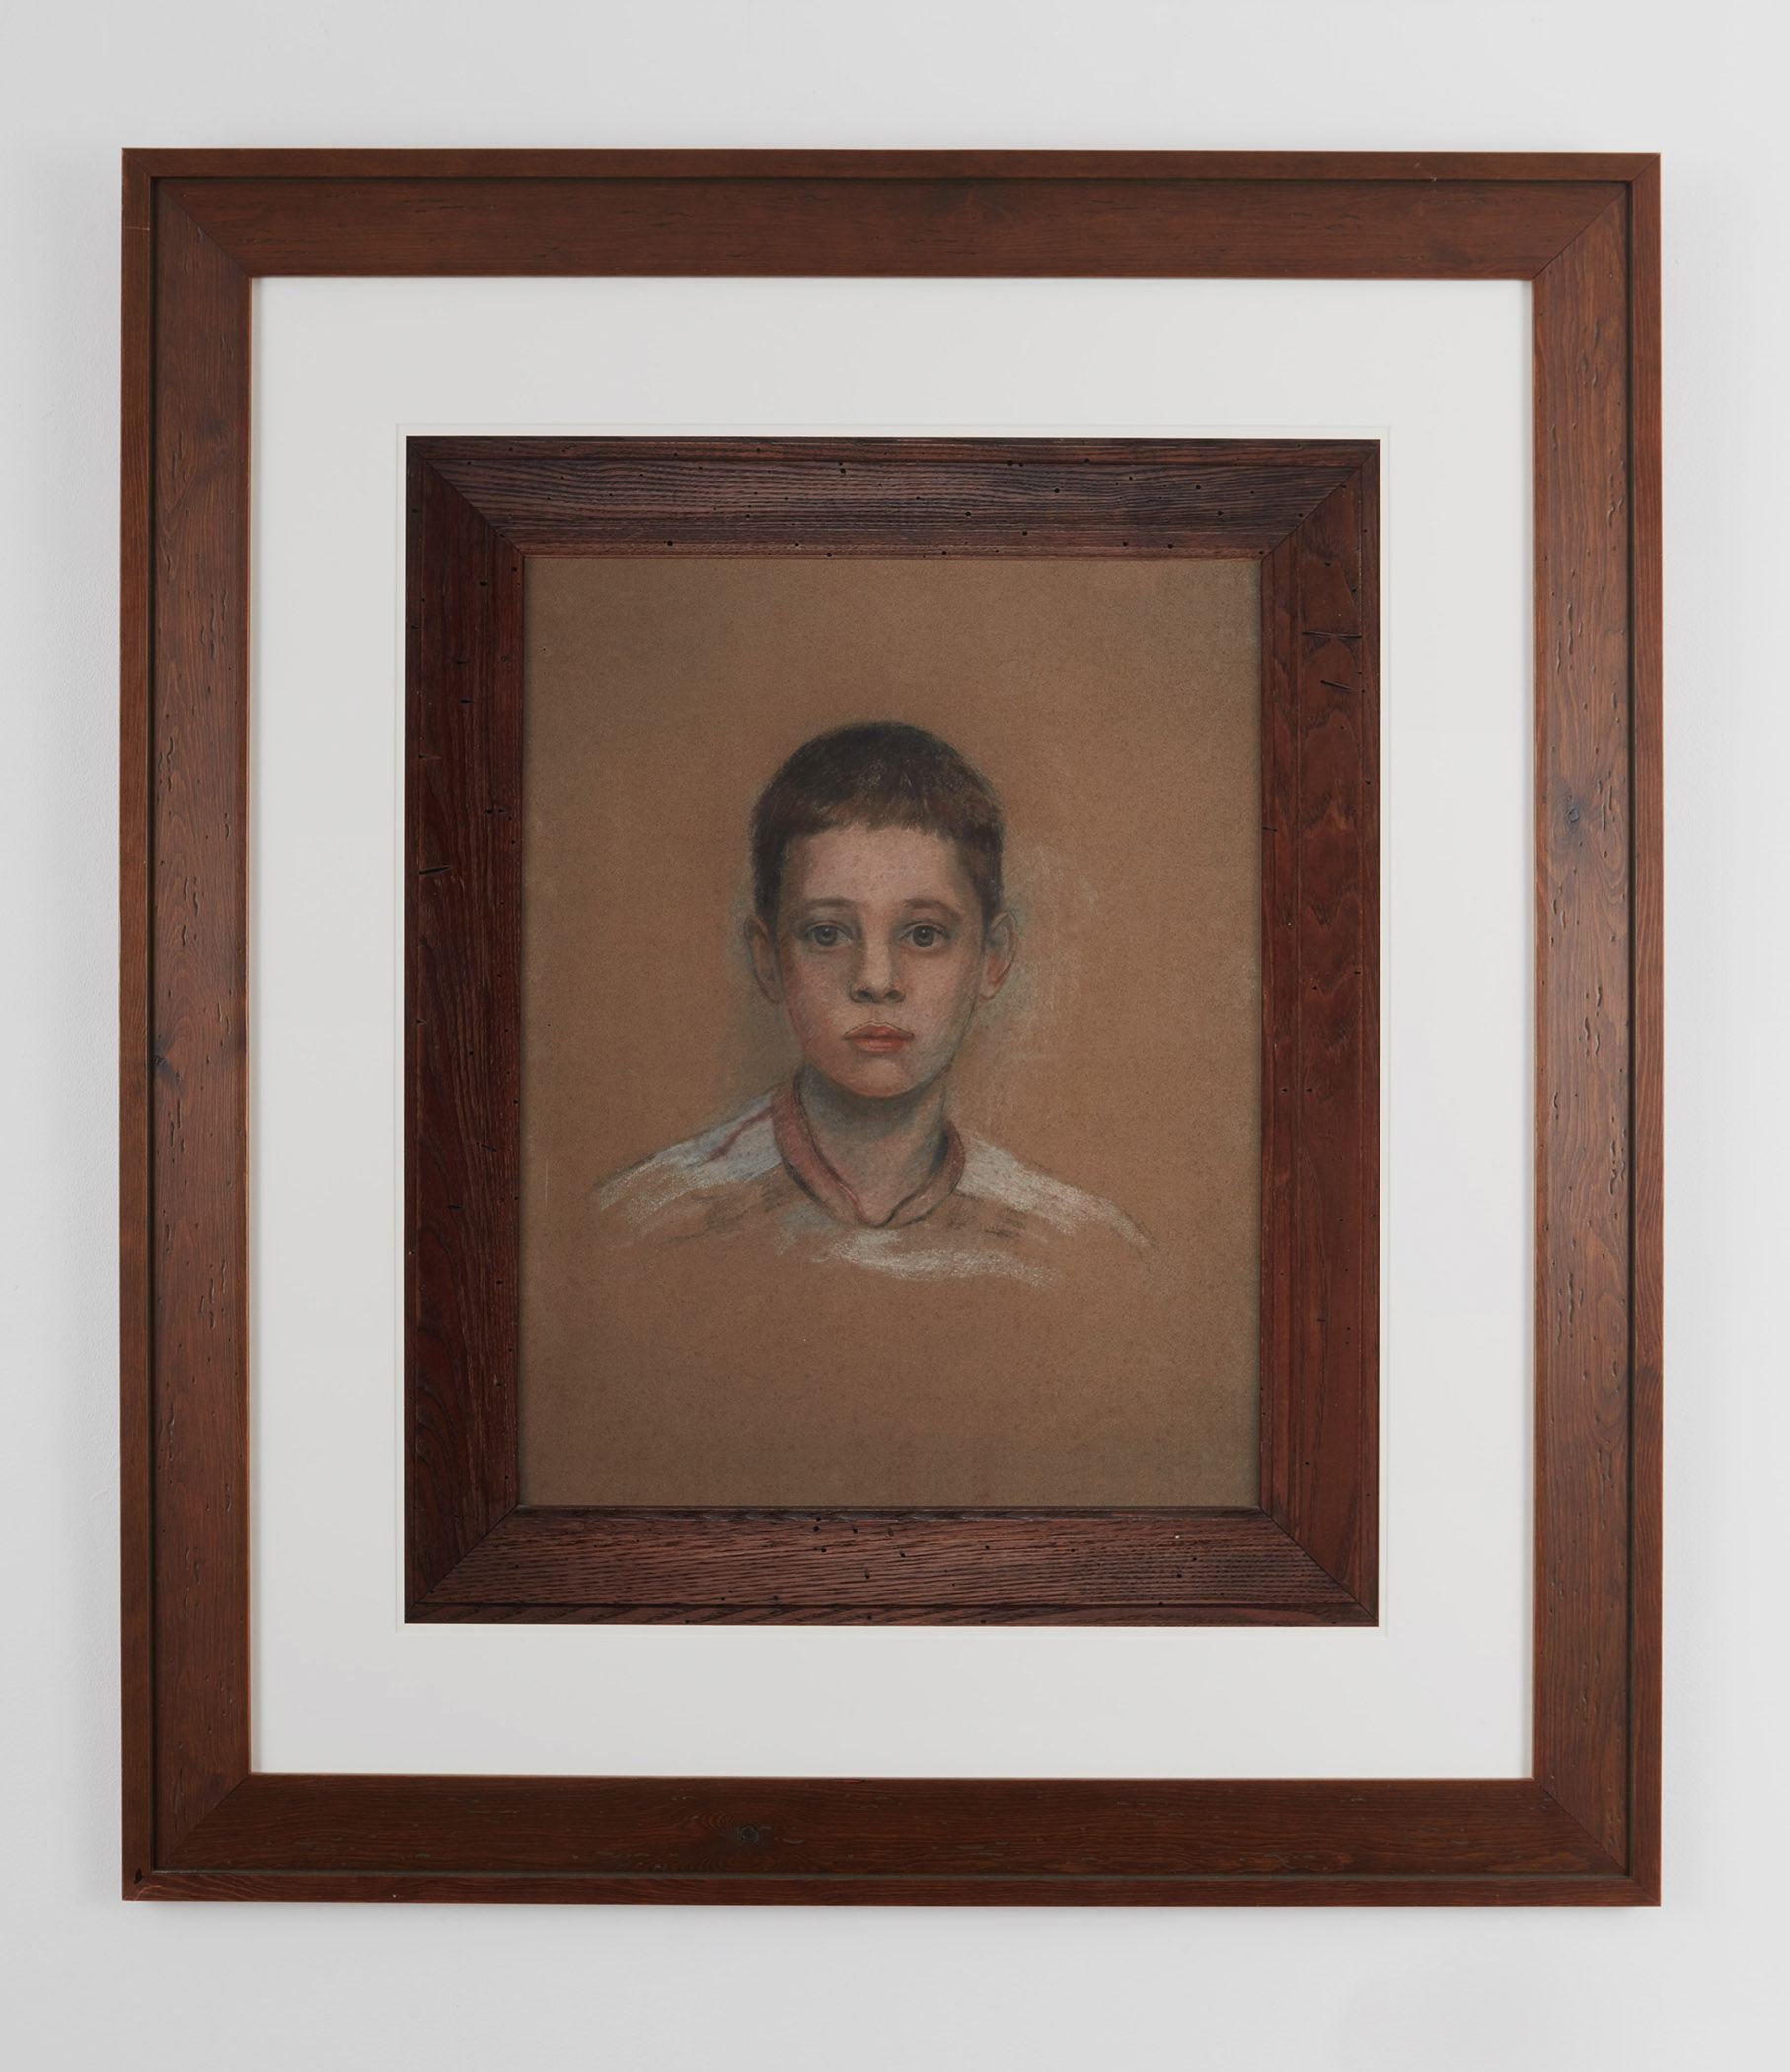 John Waters, John Jr., c-print, framed, 103 x 88 cm (40 1/2 x 34 5/8 in), 2009